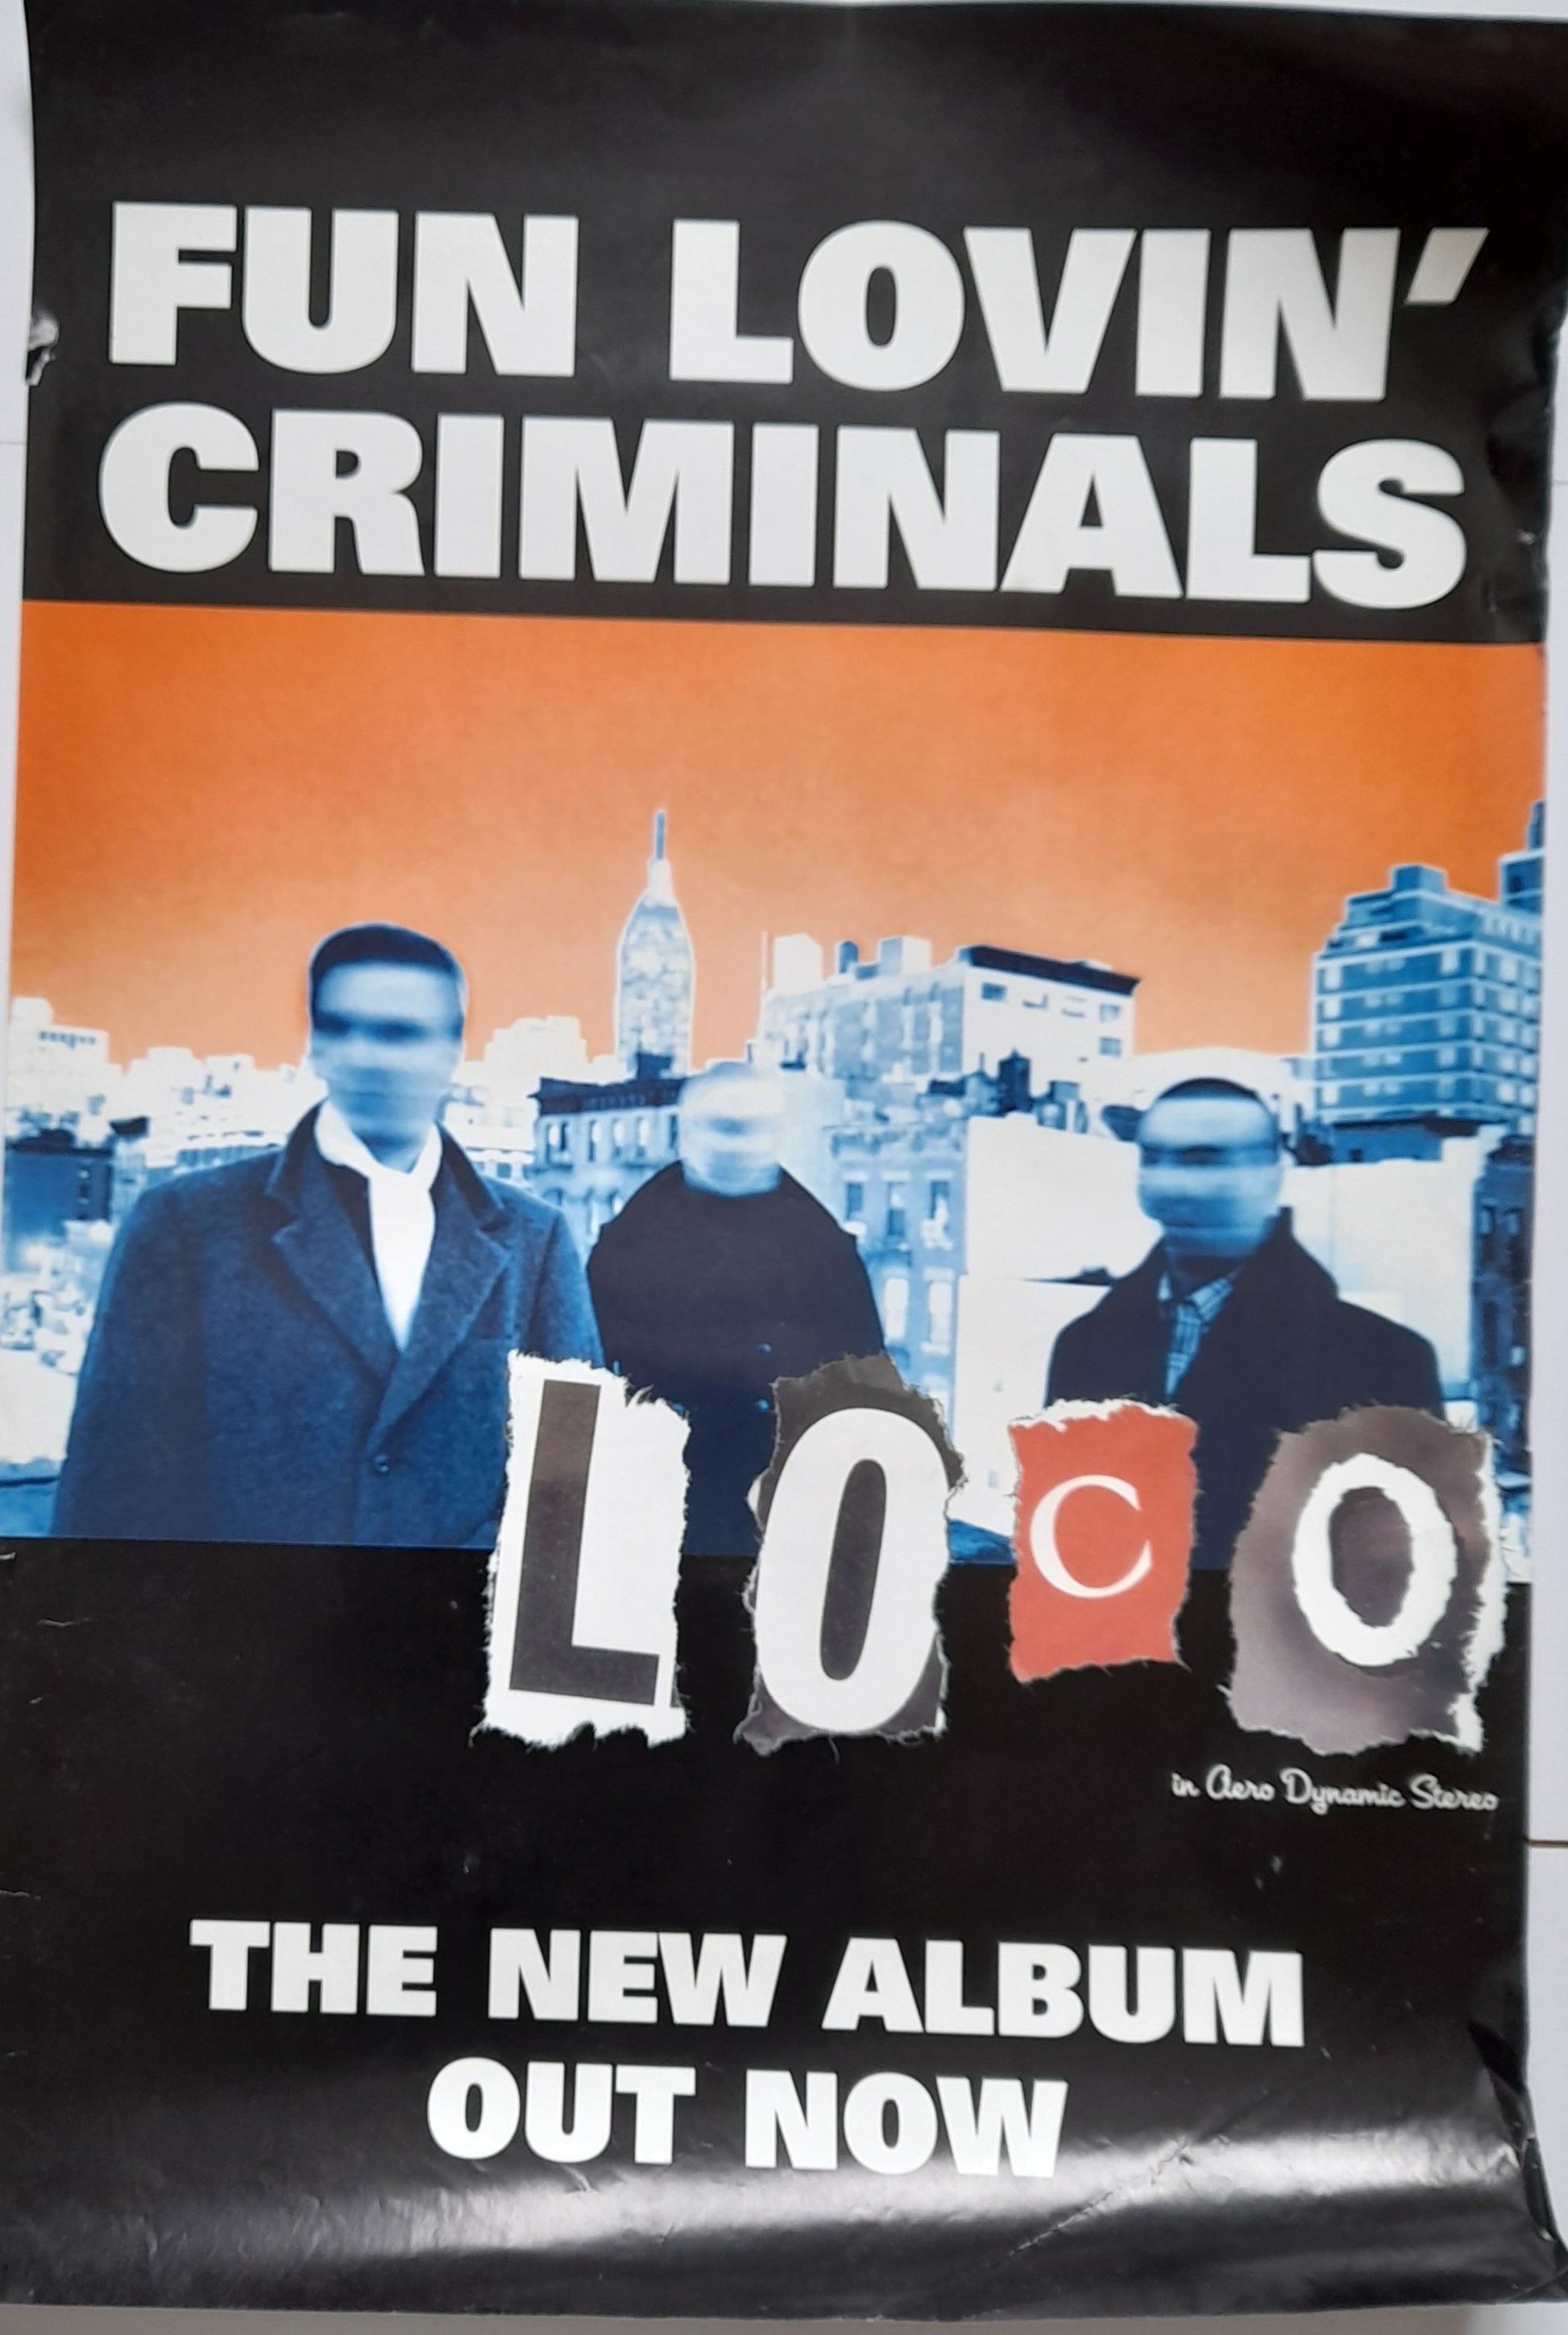 Fun Lovin Criminals Loco Album Promotional Poster - RewindPressPlay